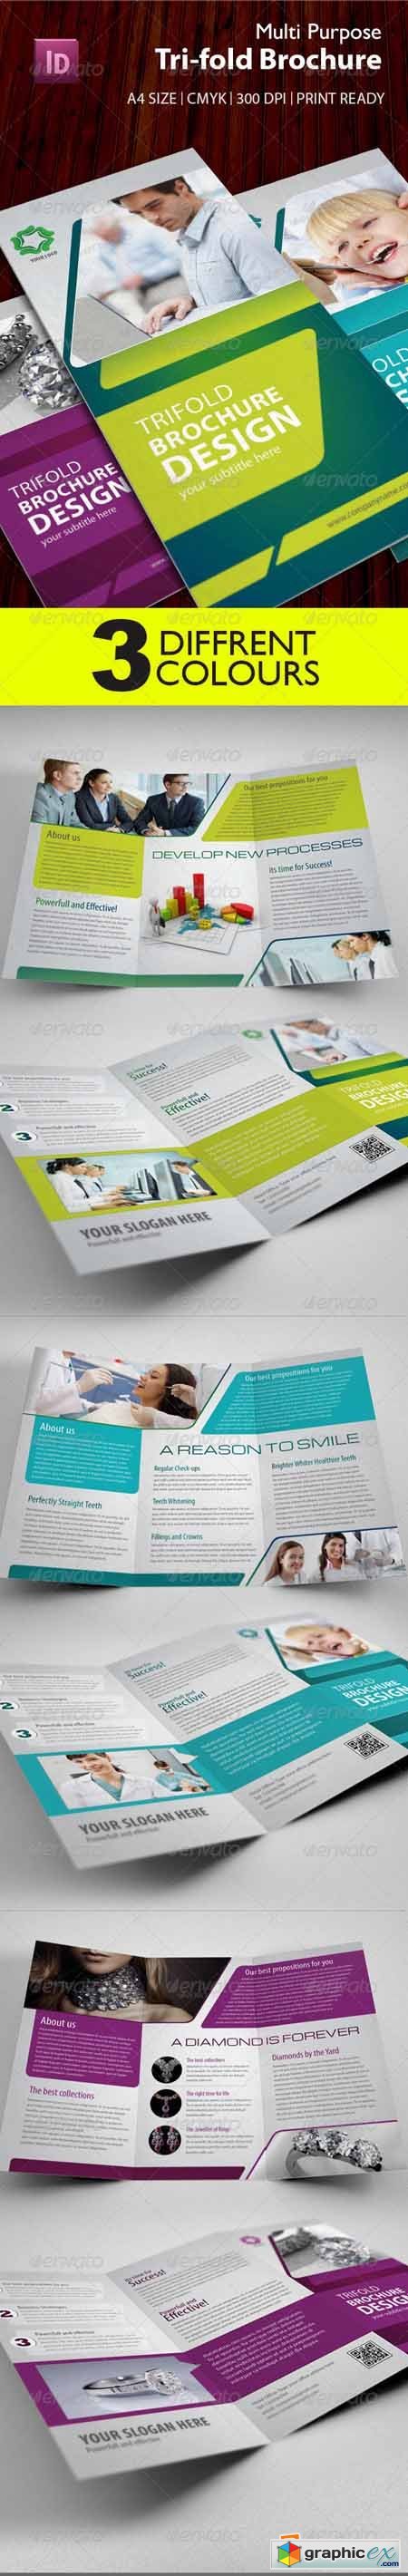 Multipurpose Trifold Brochures